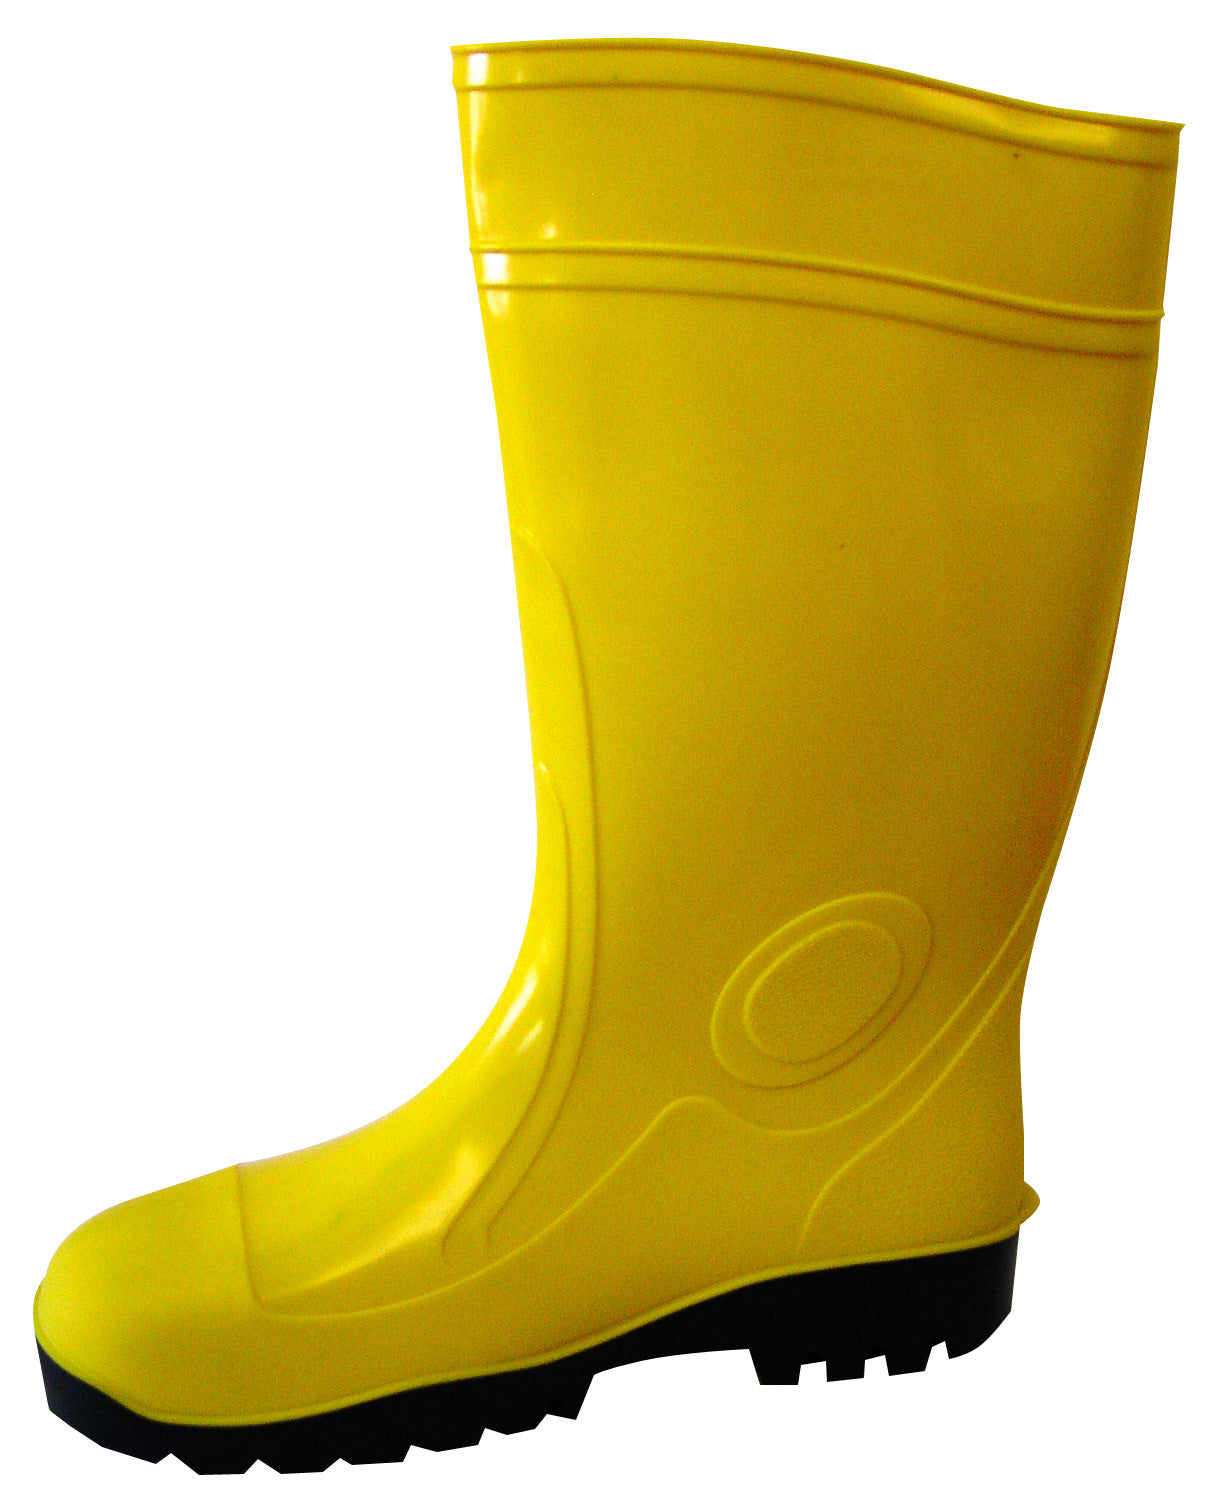 Stivali nitrile giallo antinfortunistica n.42 ITALBOOT